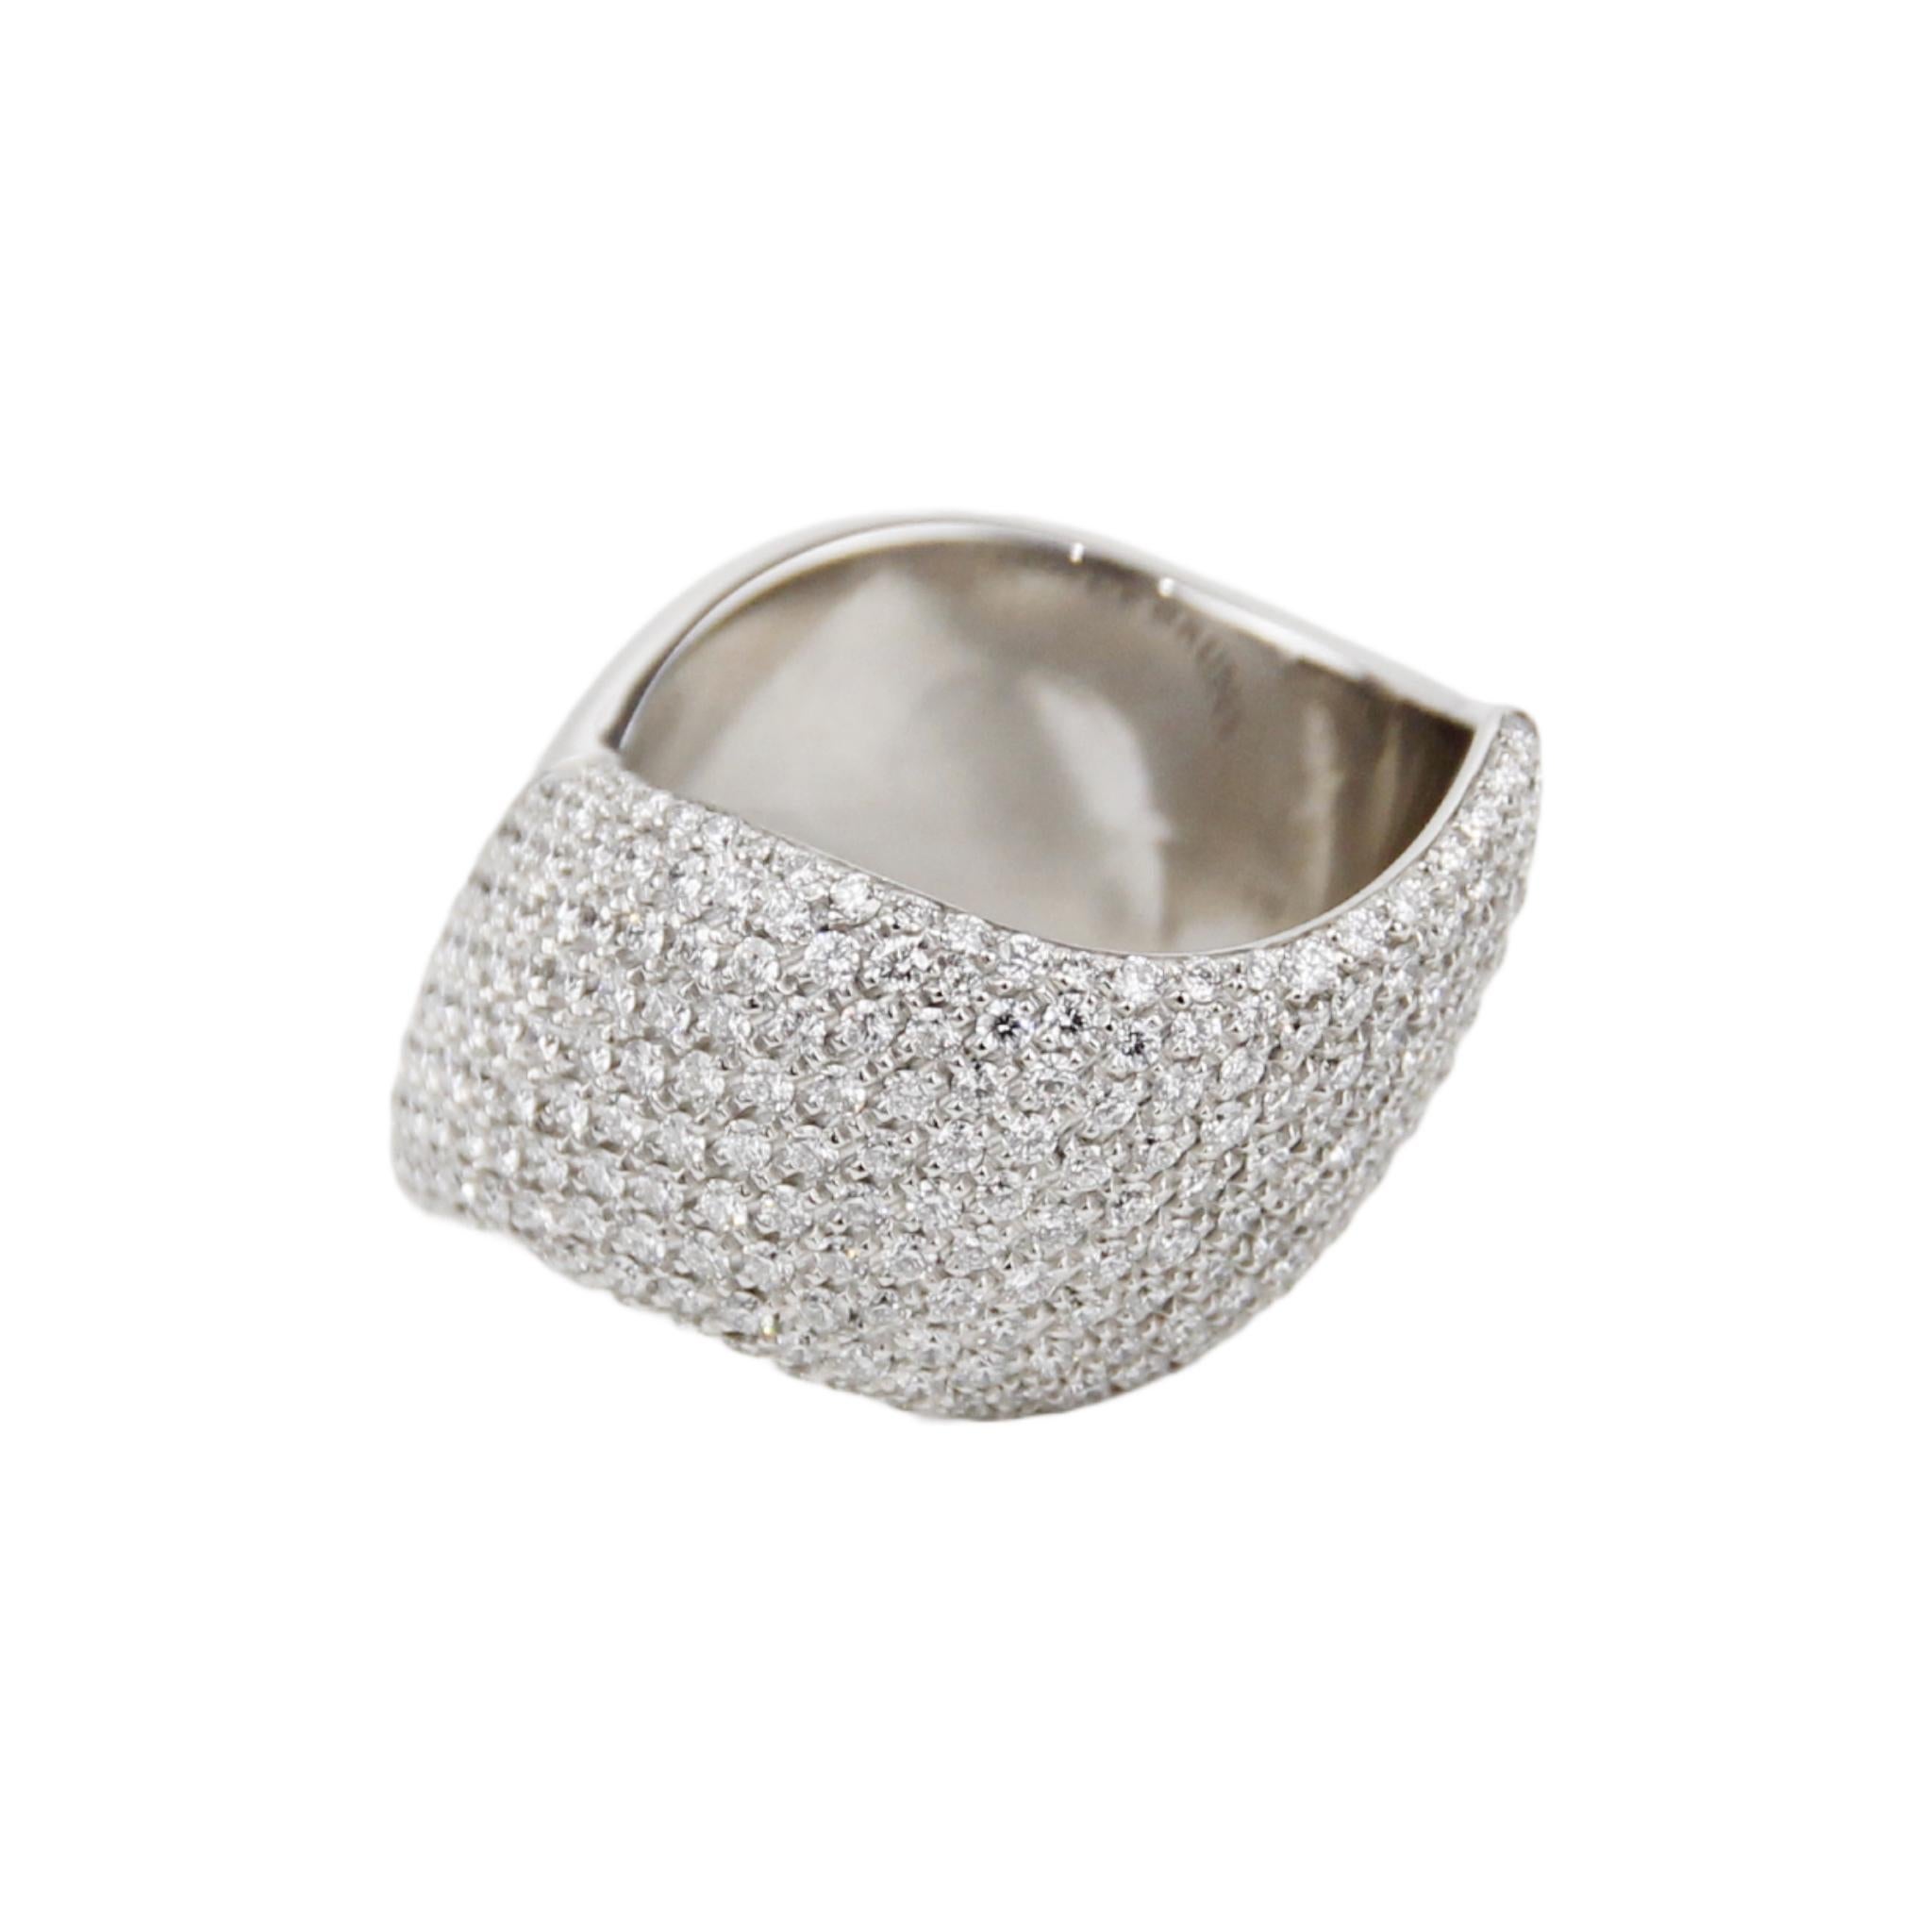 Pasquale Bruni 
White Gold 
Diamond Ring
Size: 7.5
Retail price: $11,200.00